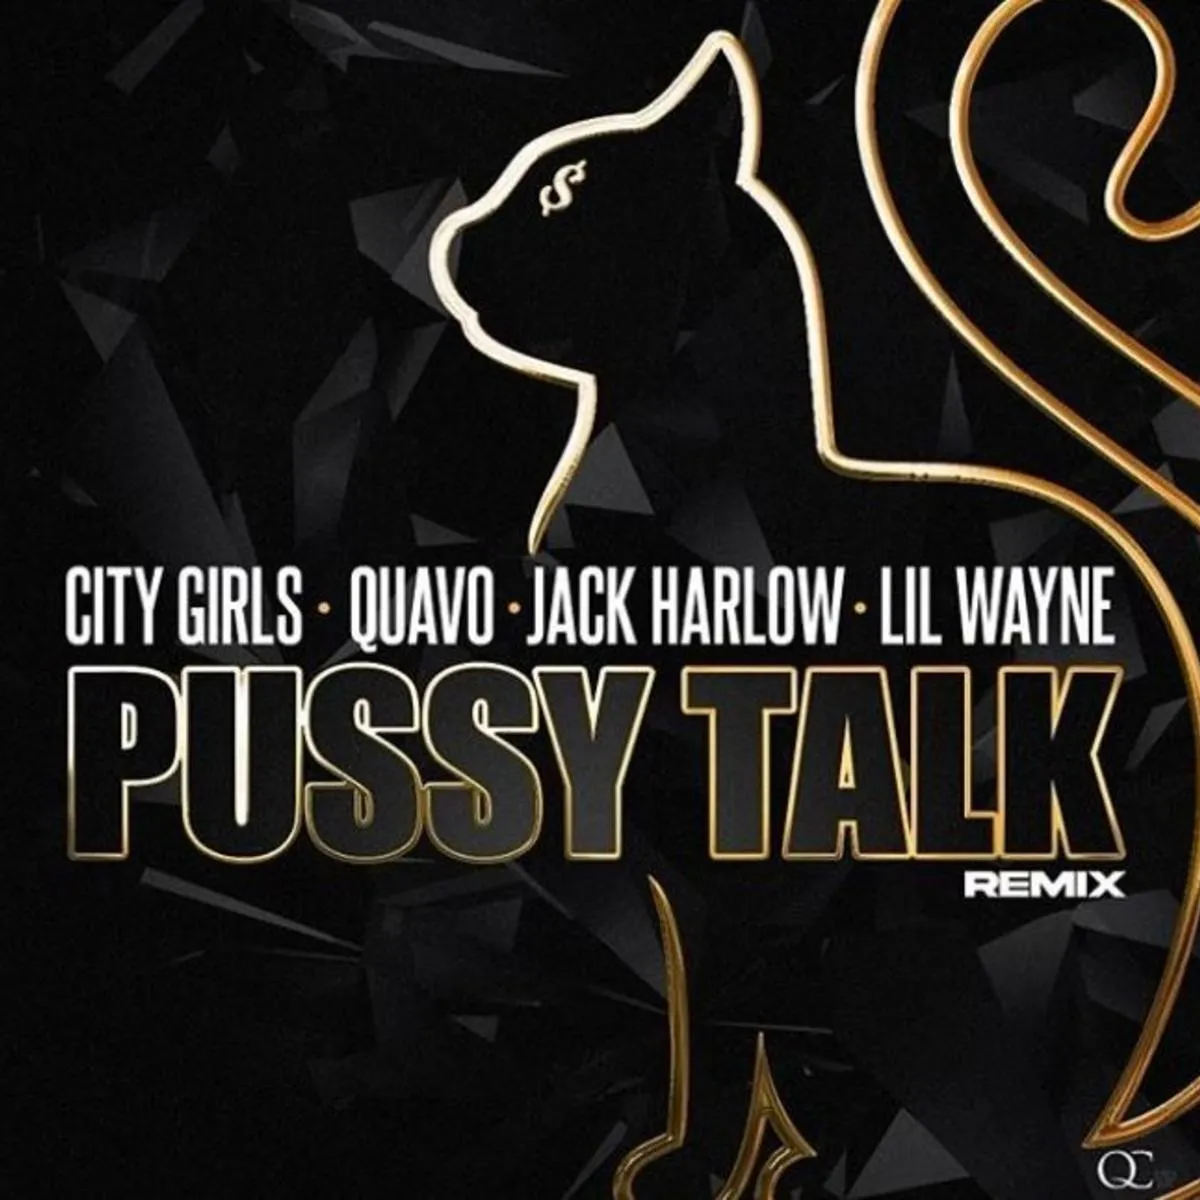 City Girls - P*ssy Talk (Remix) ft. Quavo, Lil Wayne & Jack Harlow